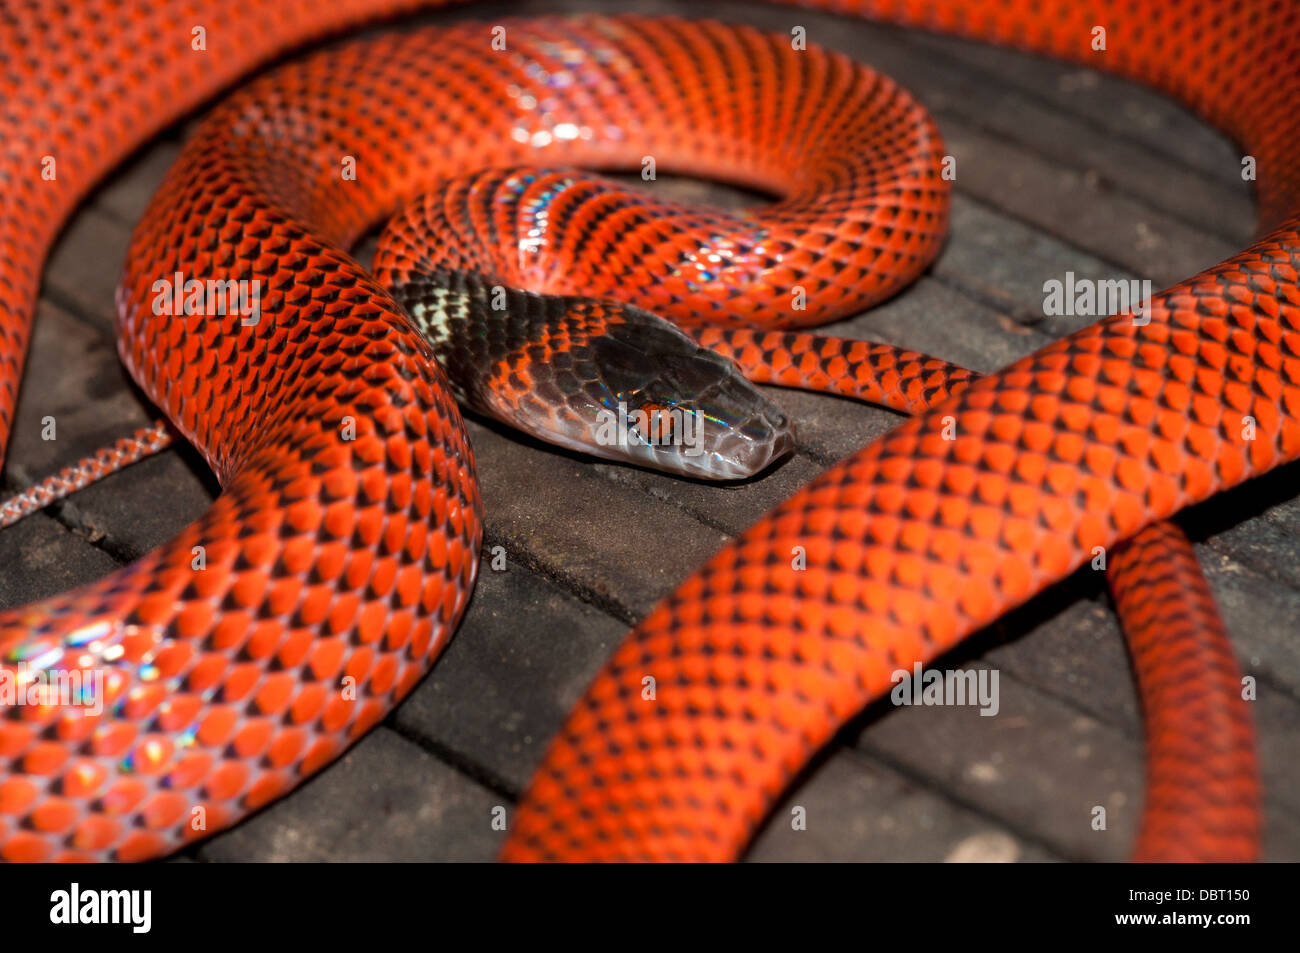 Black-headed calico snake (AKA Tschudi's false coral snake), Tambopata National Reserve, Peru Stock Photo